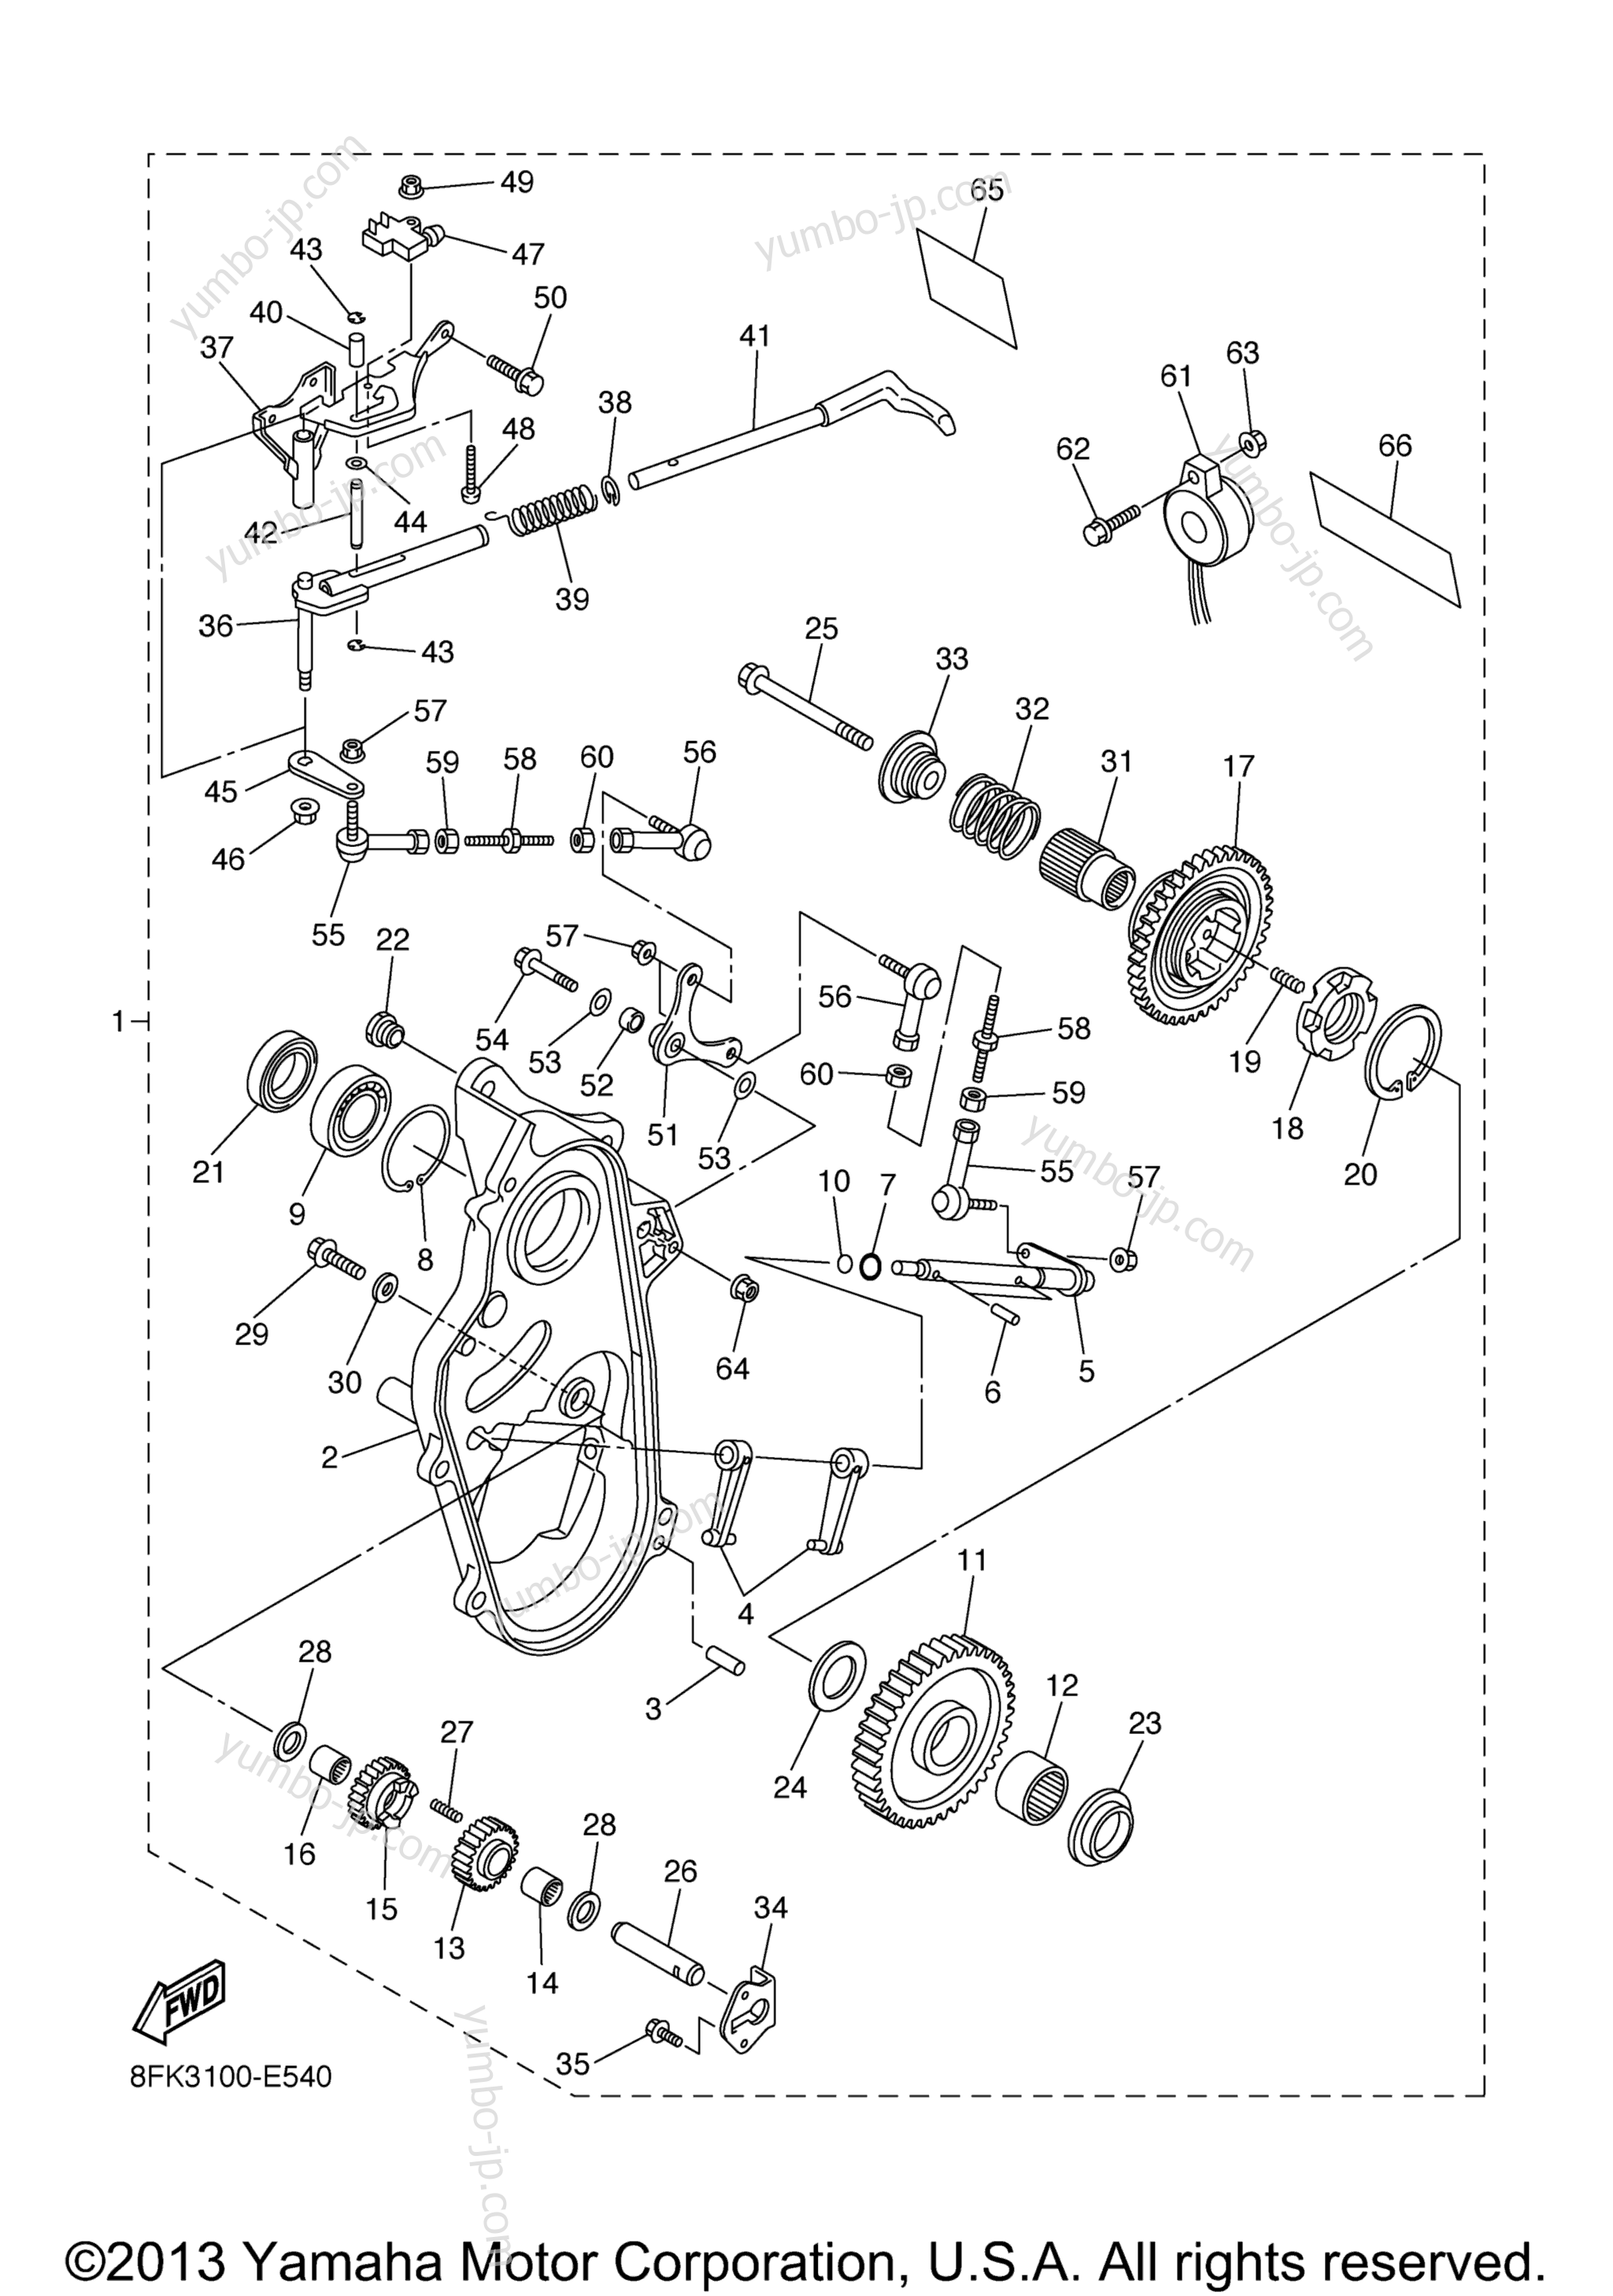 Alternate Reverse Gear Kit for snowmobiles YAMAHA VECTOR MOUNTAIN SE (RS90MSL) 2006 year